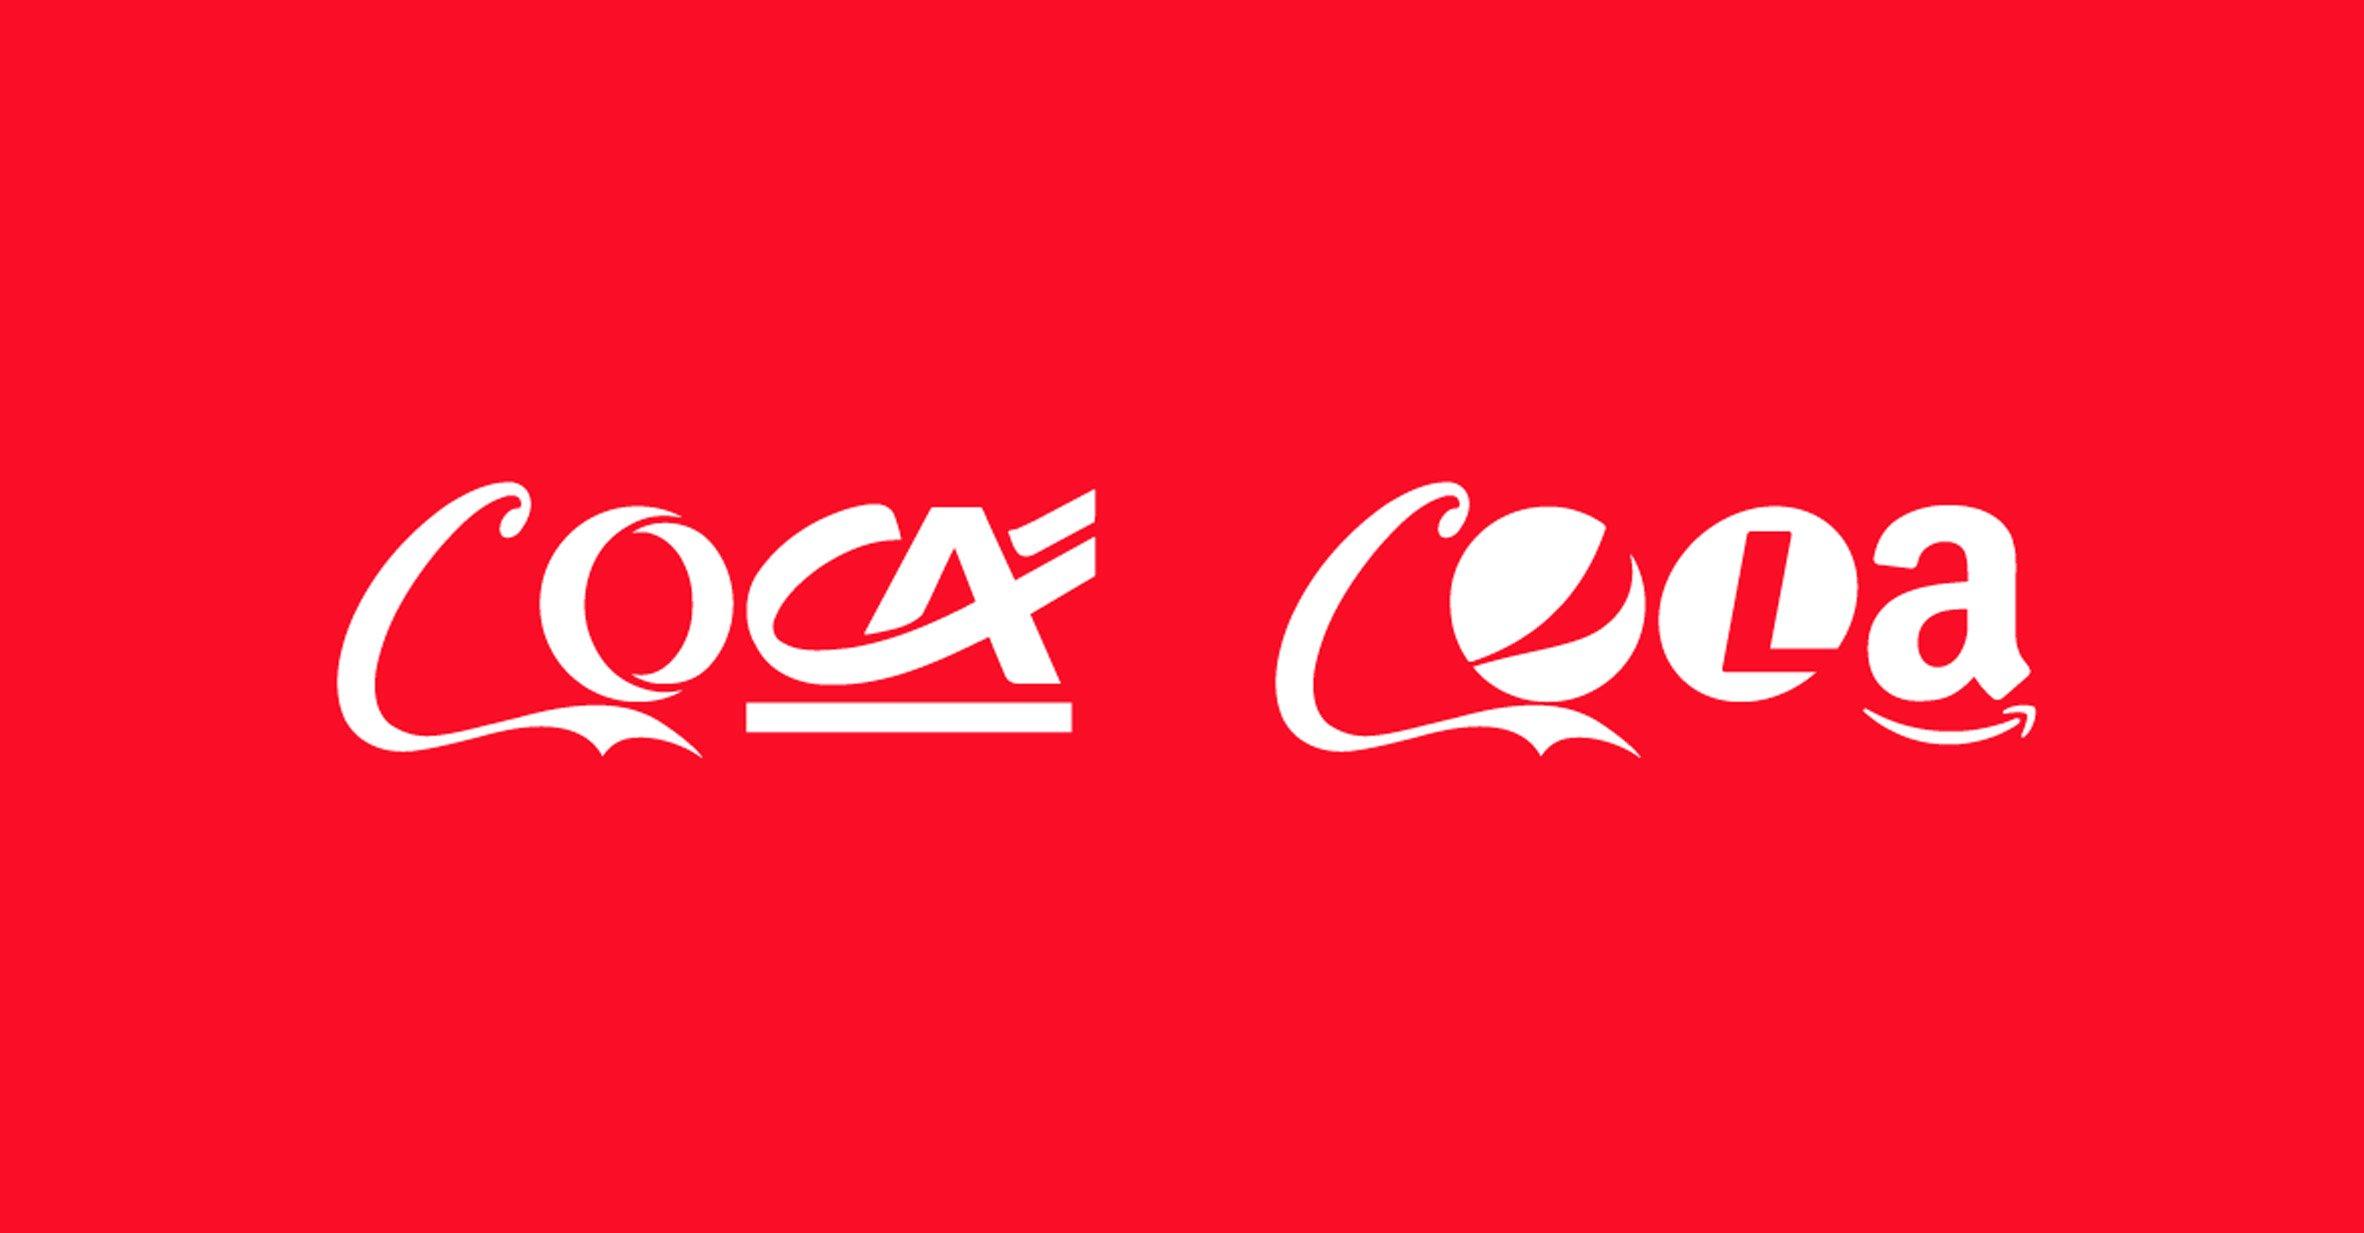 Brand New Roman Font Logo CocaCola